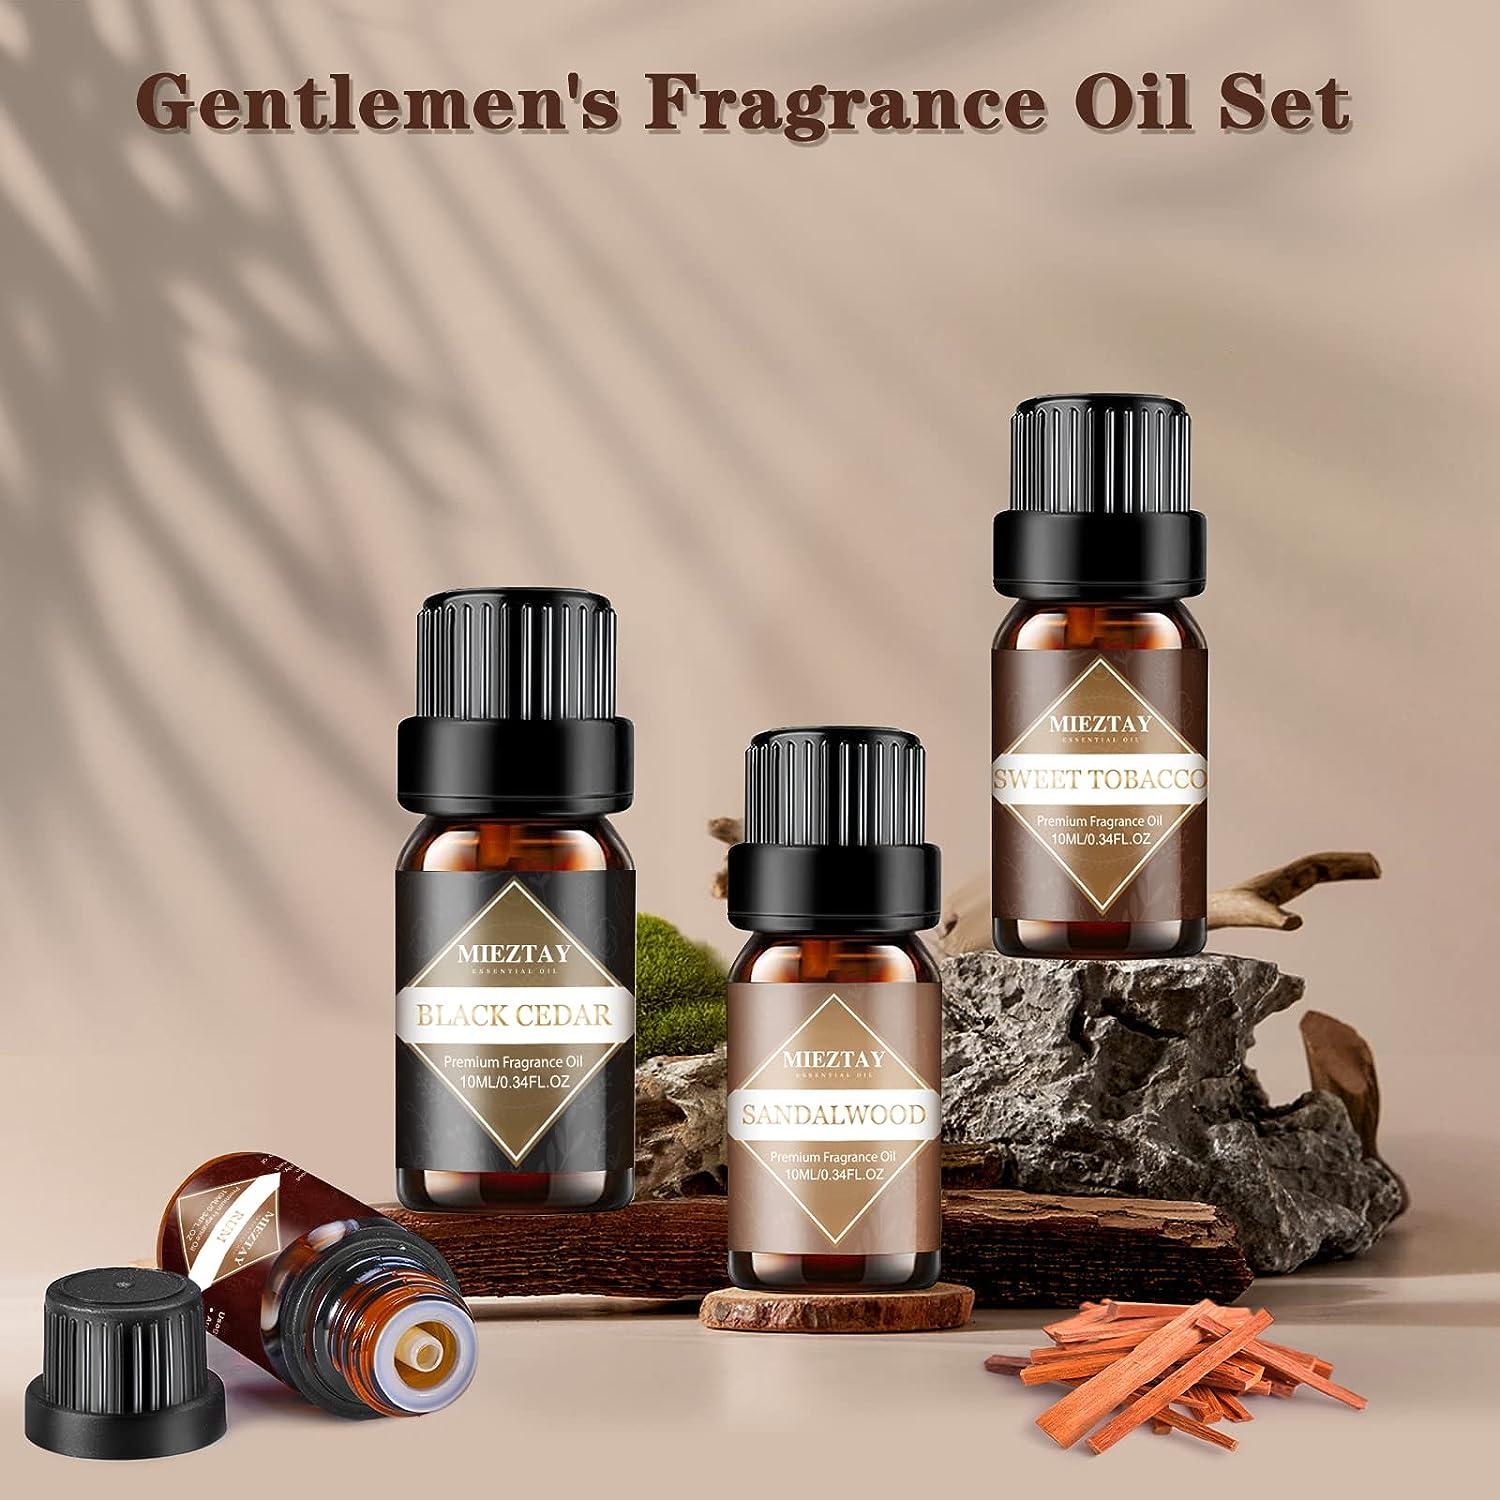 Mens Essential Oils Set - TOP 6 Gentlemen's Fragrance Oil for Diffuser,  Candle & Soap Making - Sandalwood, Cologne, Black Cedar, Leather, Sweet  Tobacco, Bay Rum Essential Oil Kit for Men (10mL)